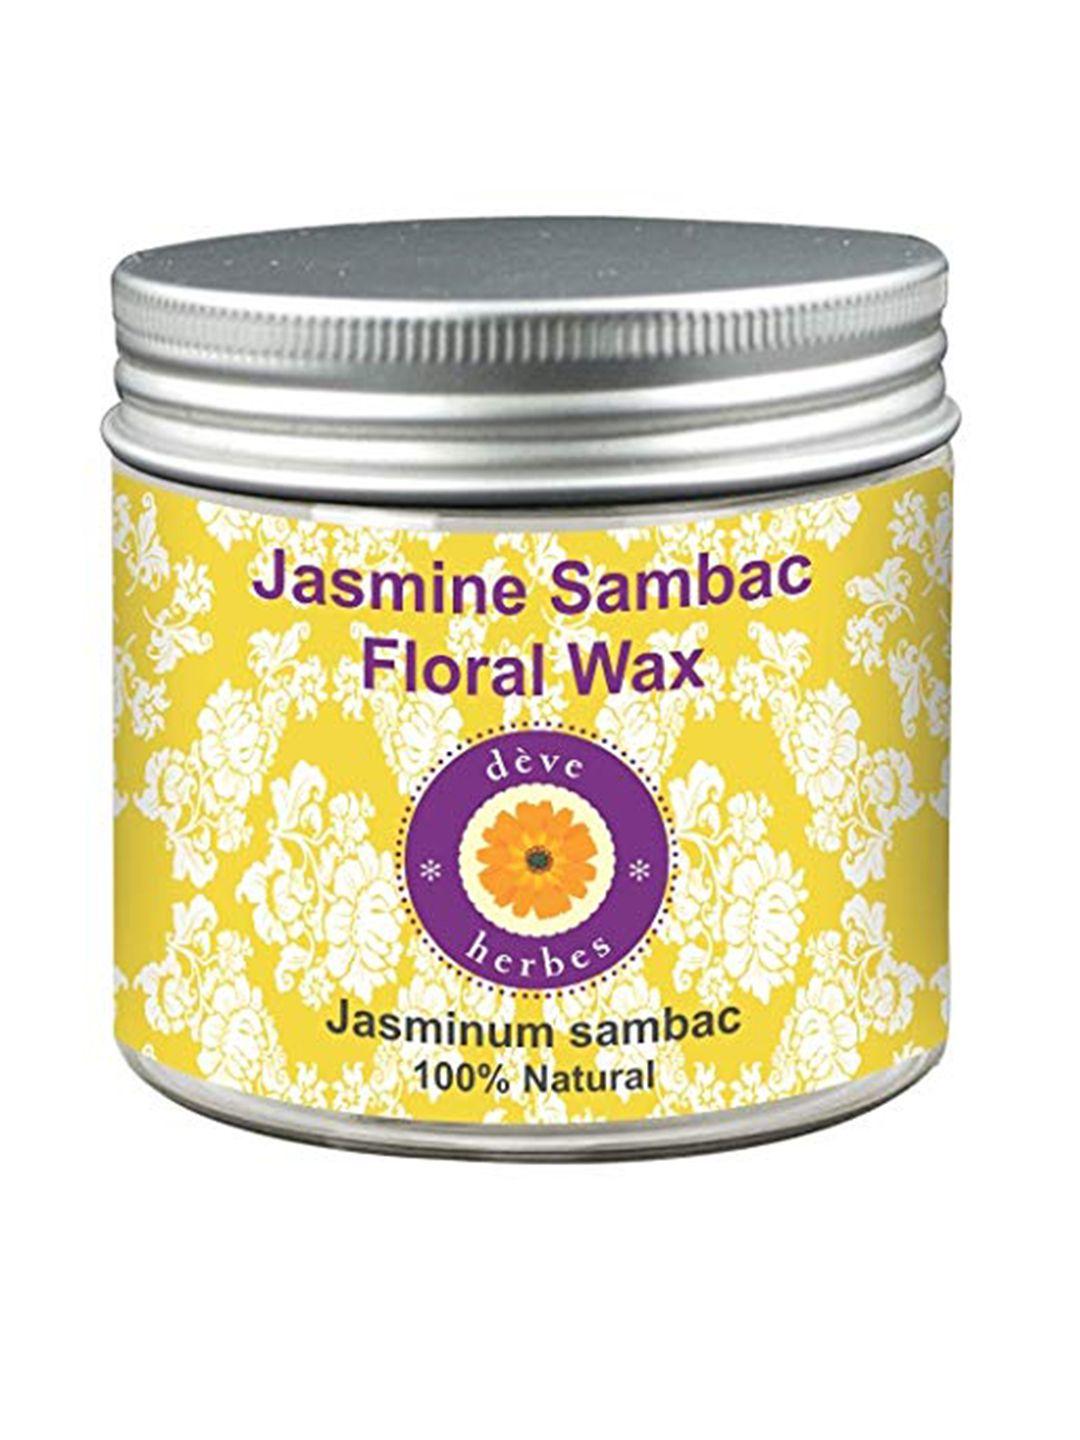 deve herbes pure jasmine sambac floral wax - 100% natural therapeutic grade - 50g